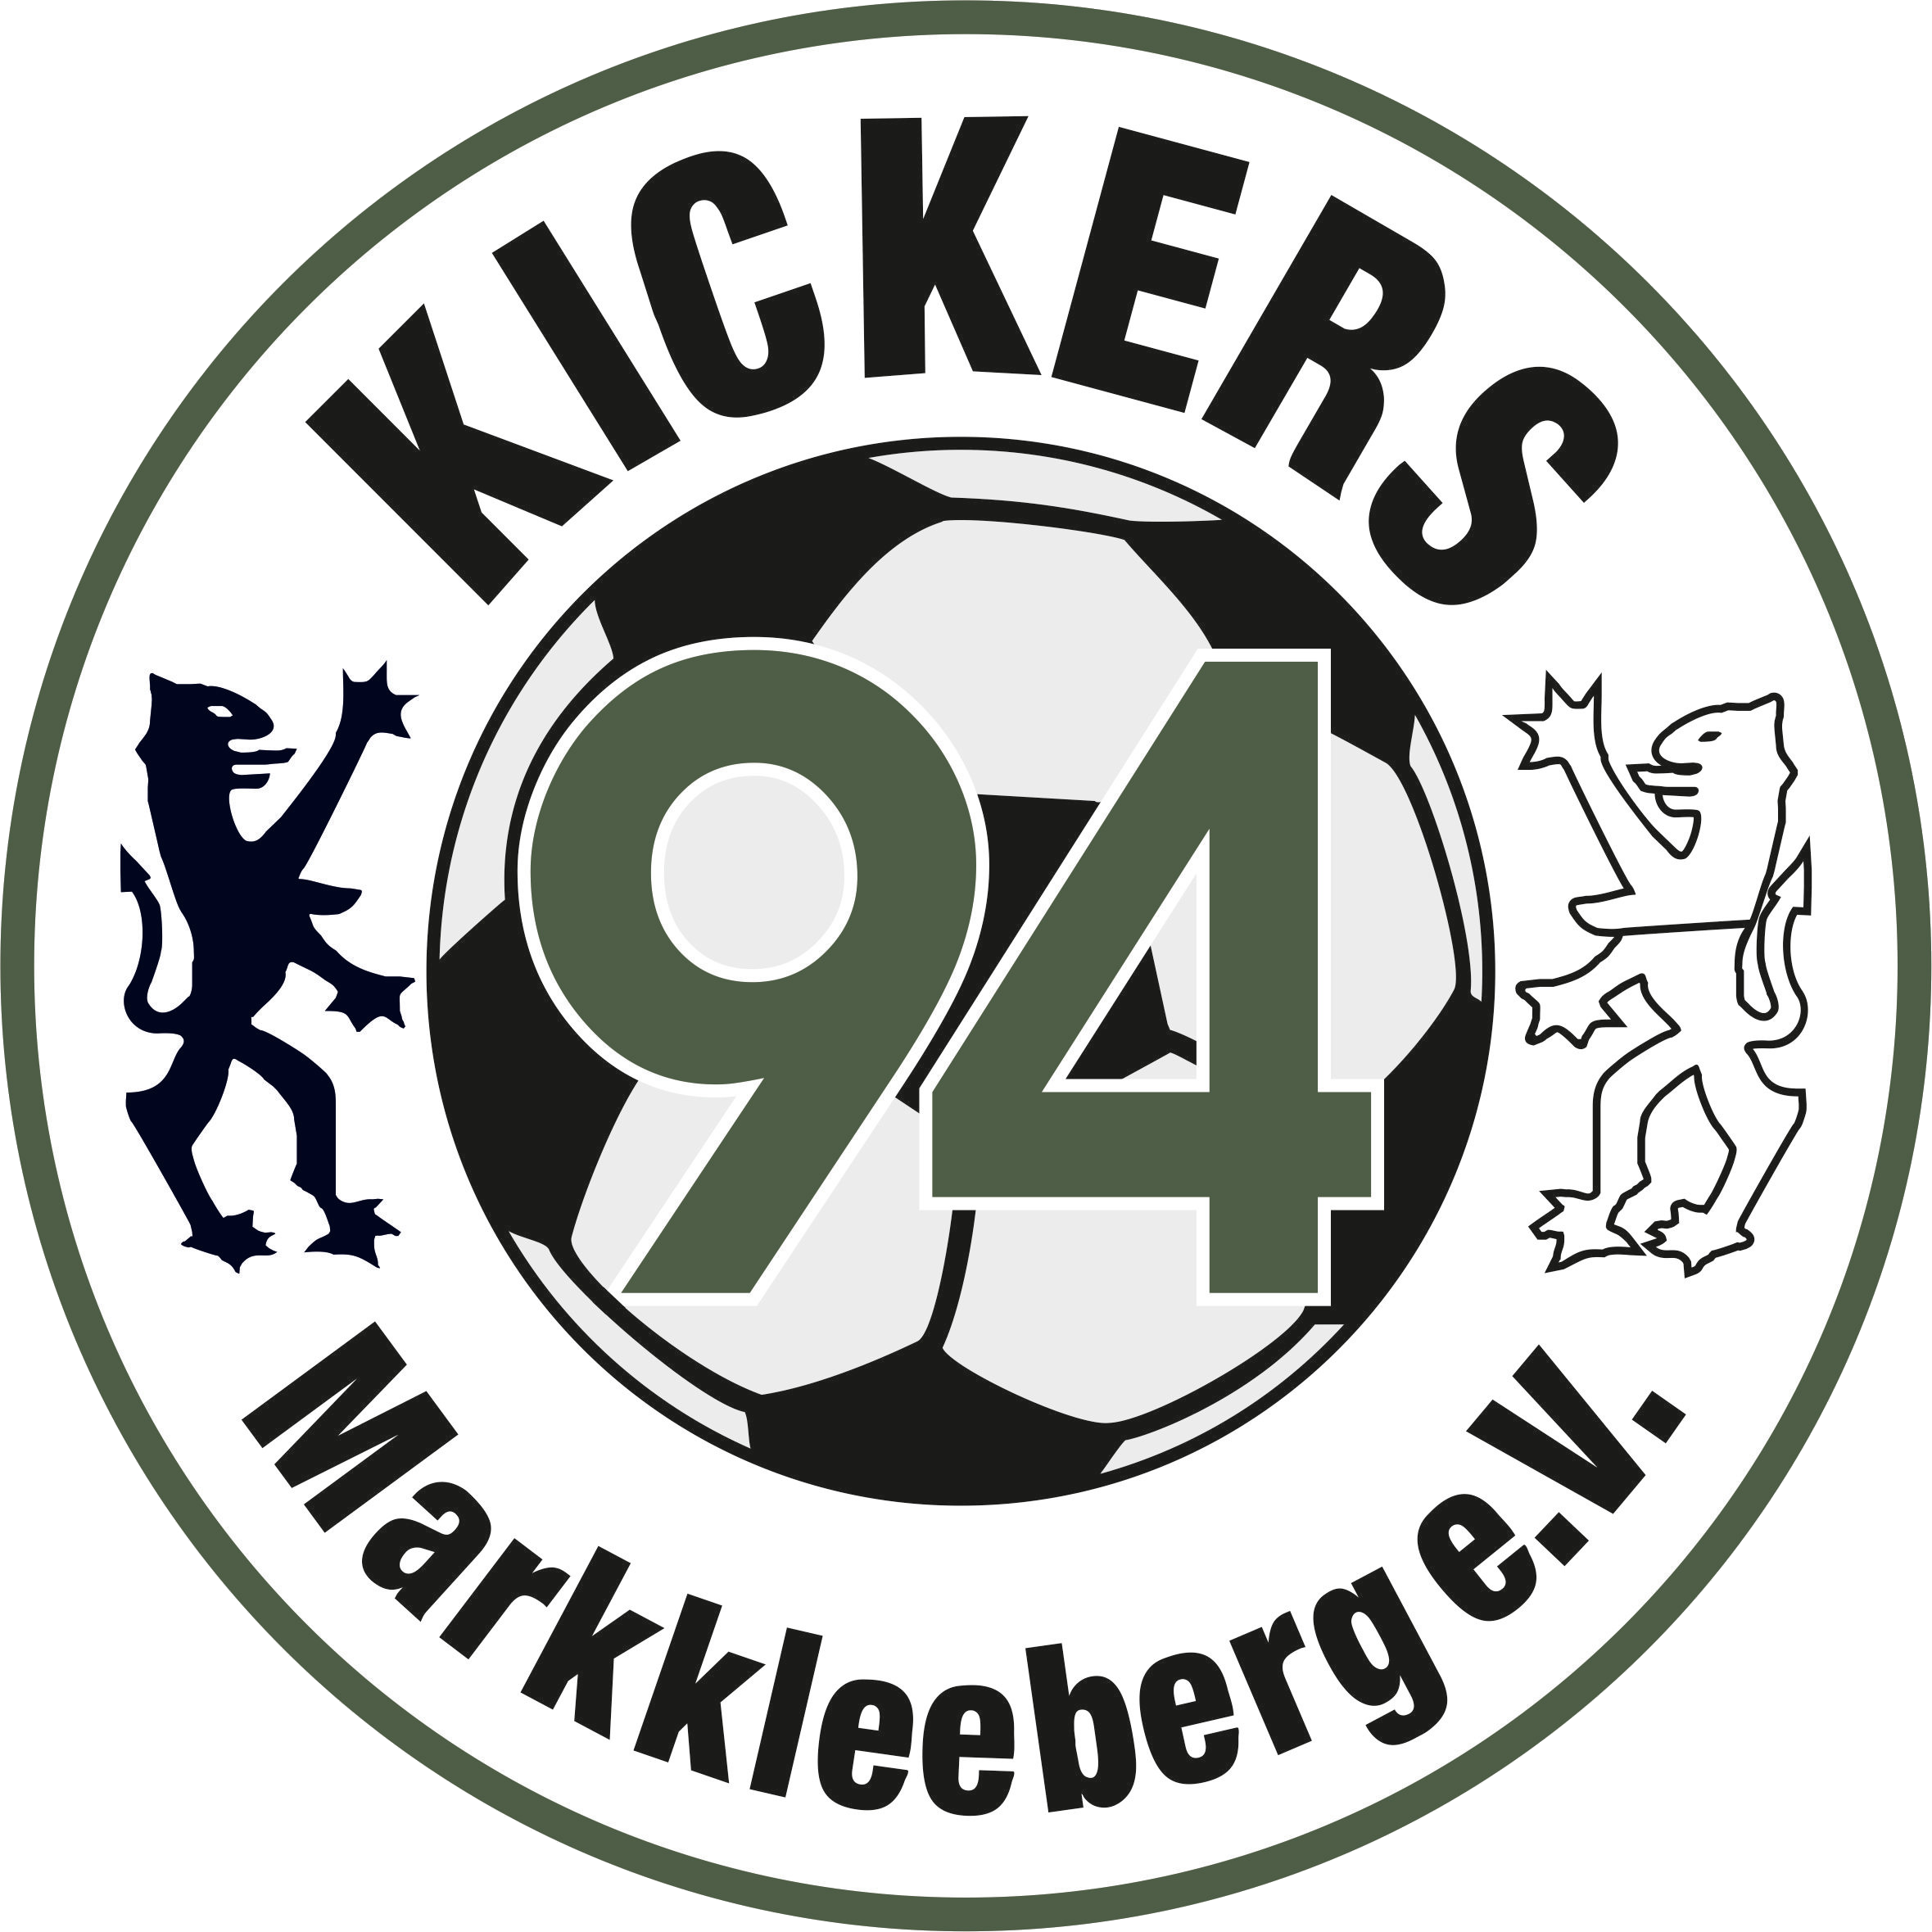 (c) Kickers94.de